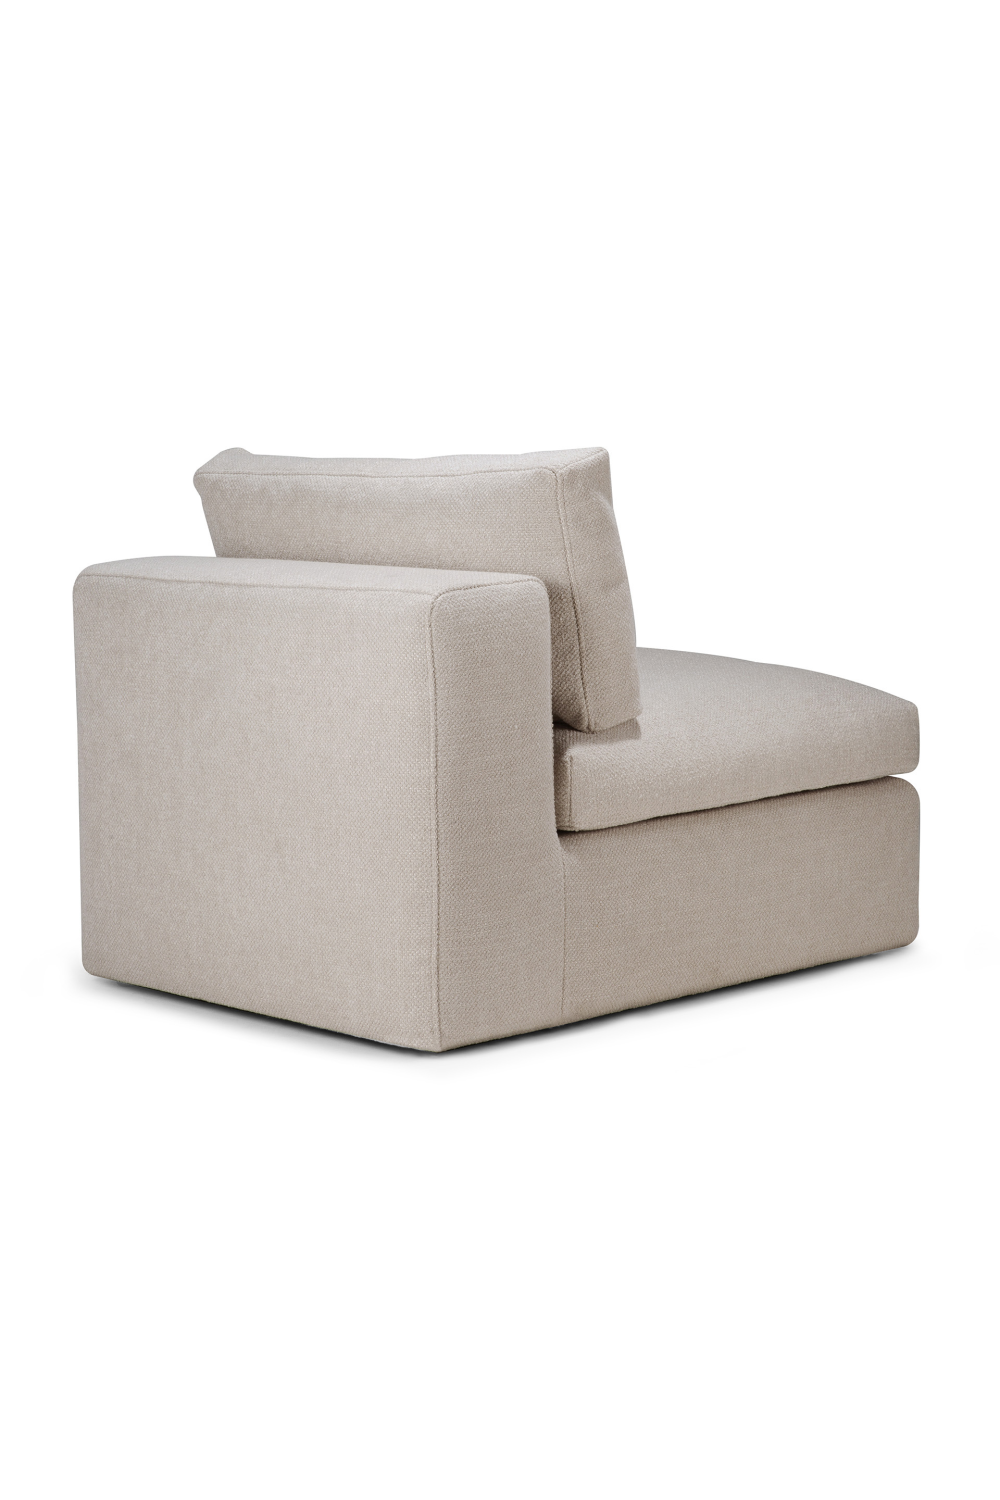 Modern Classic Sofa | Ethnicraft Mellow | Oroa.com